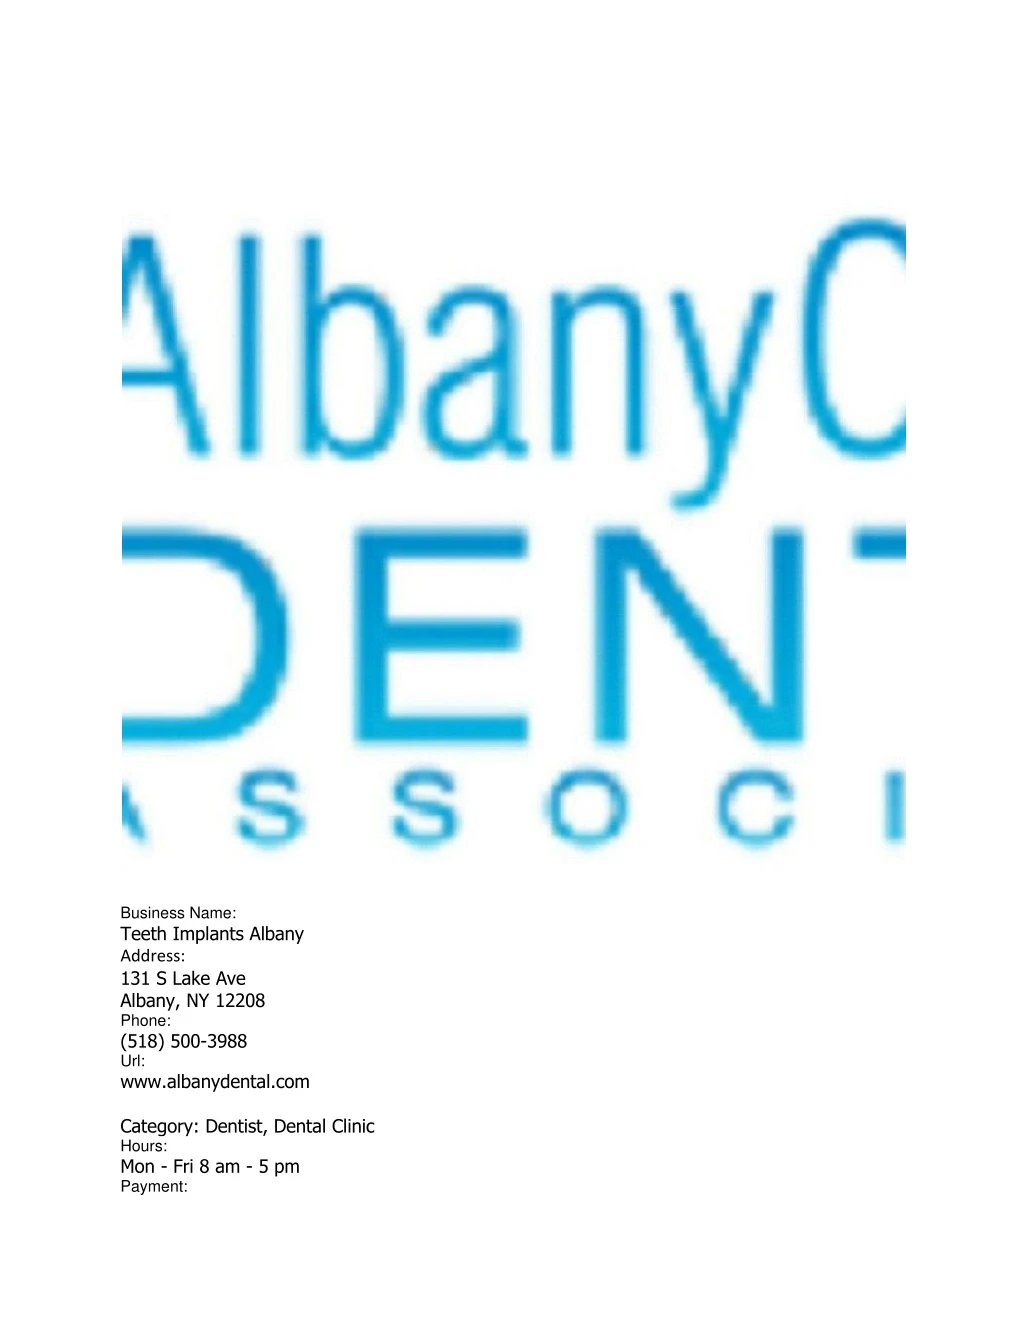 business name teeth implants albany address